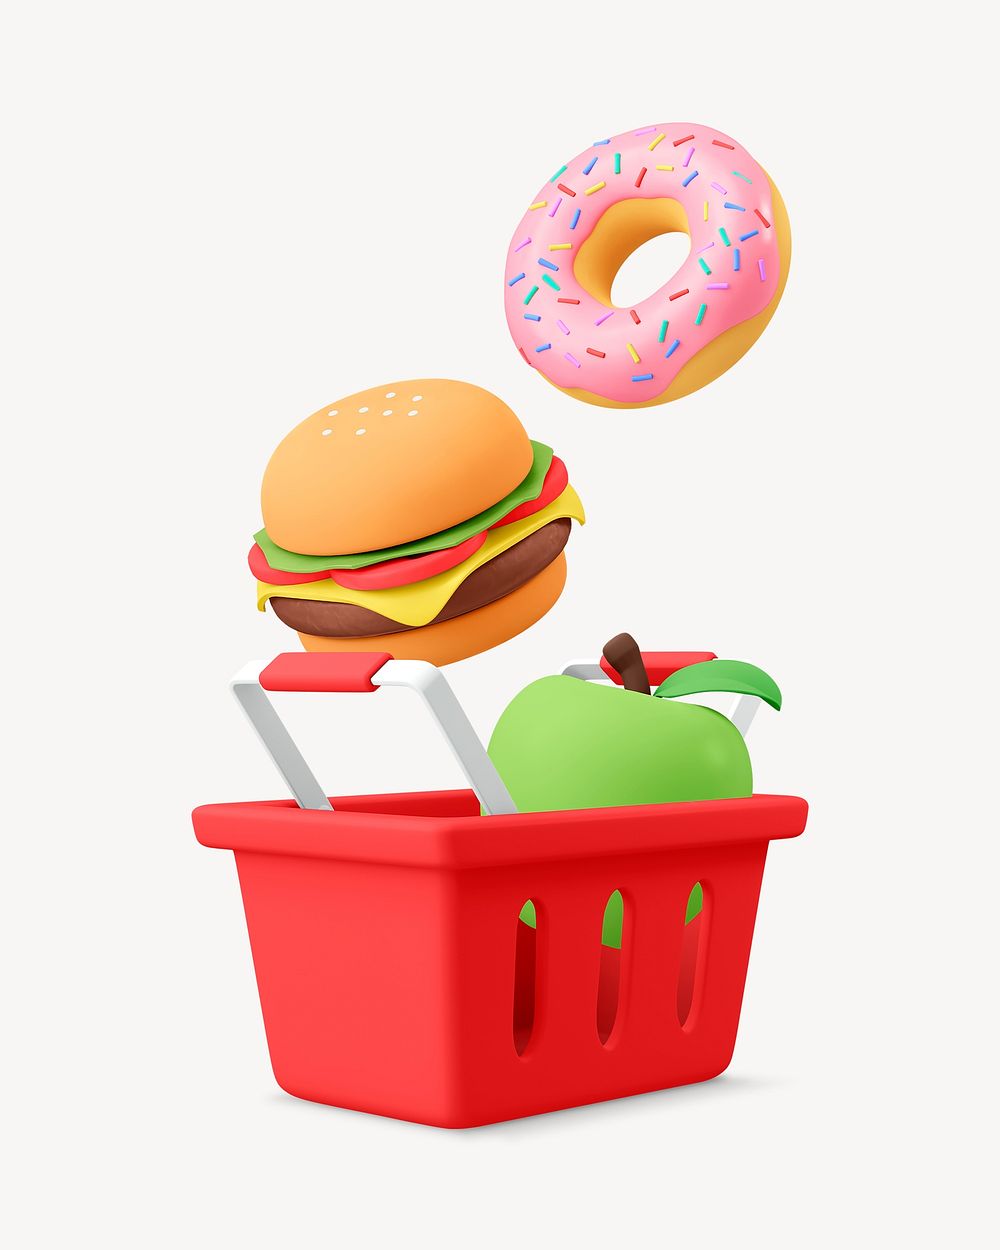 Food shopping basket, 3D object illustration  psd